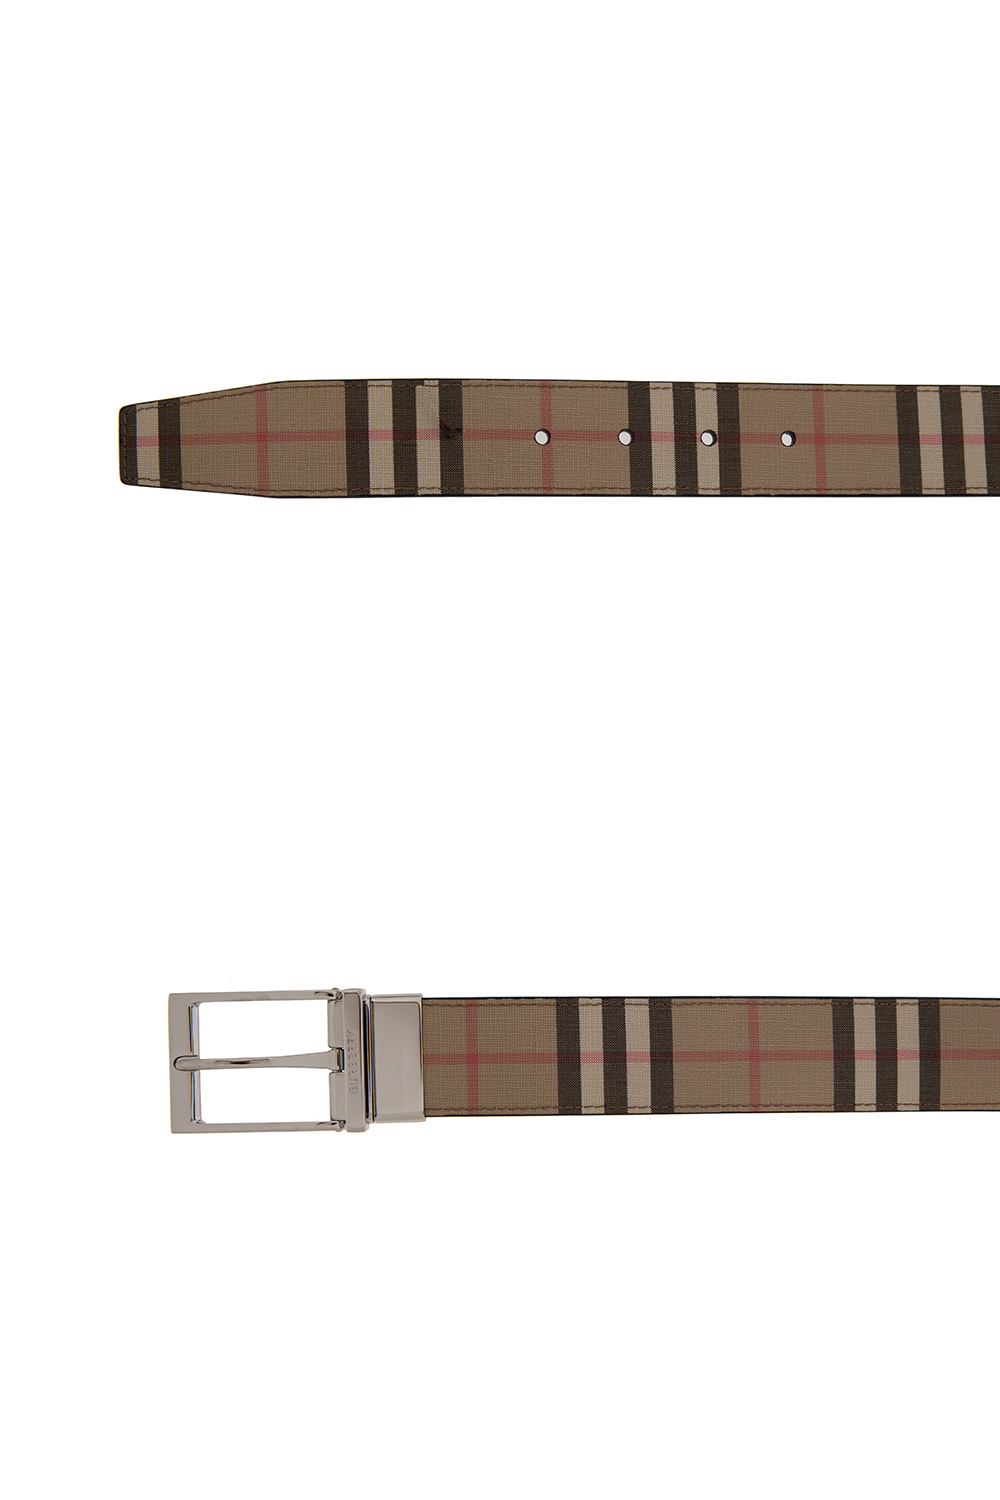 Burberry Reversible Vintage Check & Leather Belt